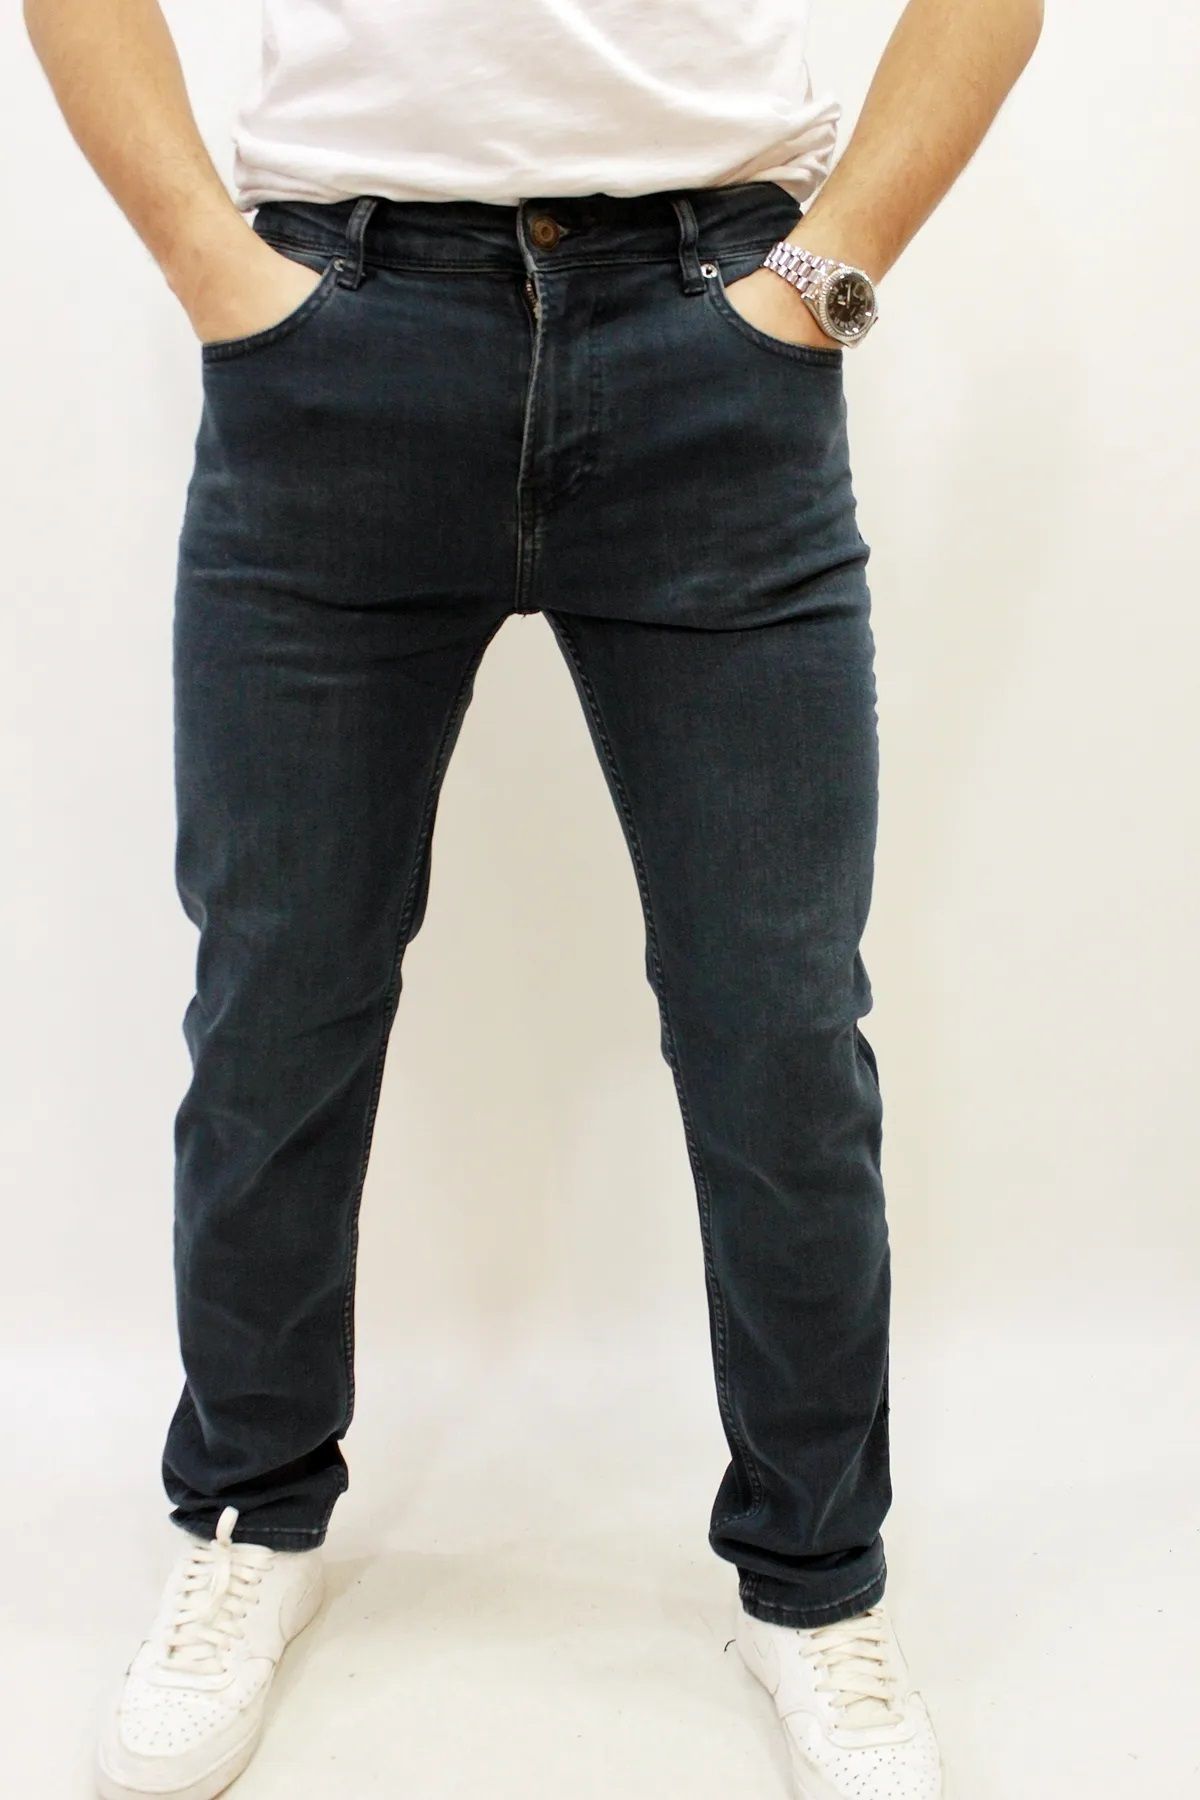 Twister Jeans Erkek Koyu Mavi Rahat Kesim Düz Paça Likralı Kot Pantolon Martin 704-02 Dark Brown